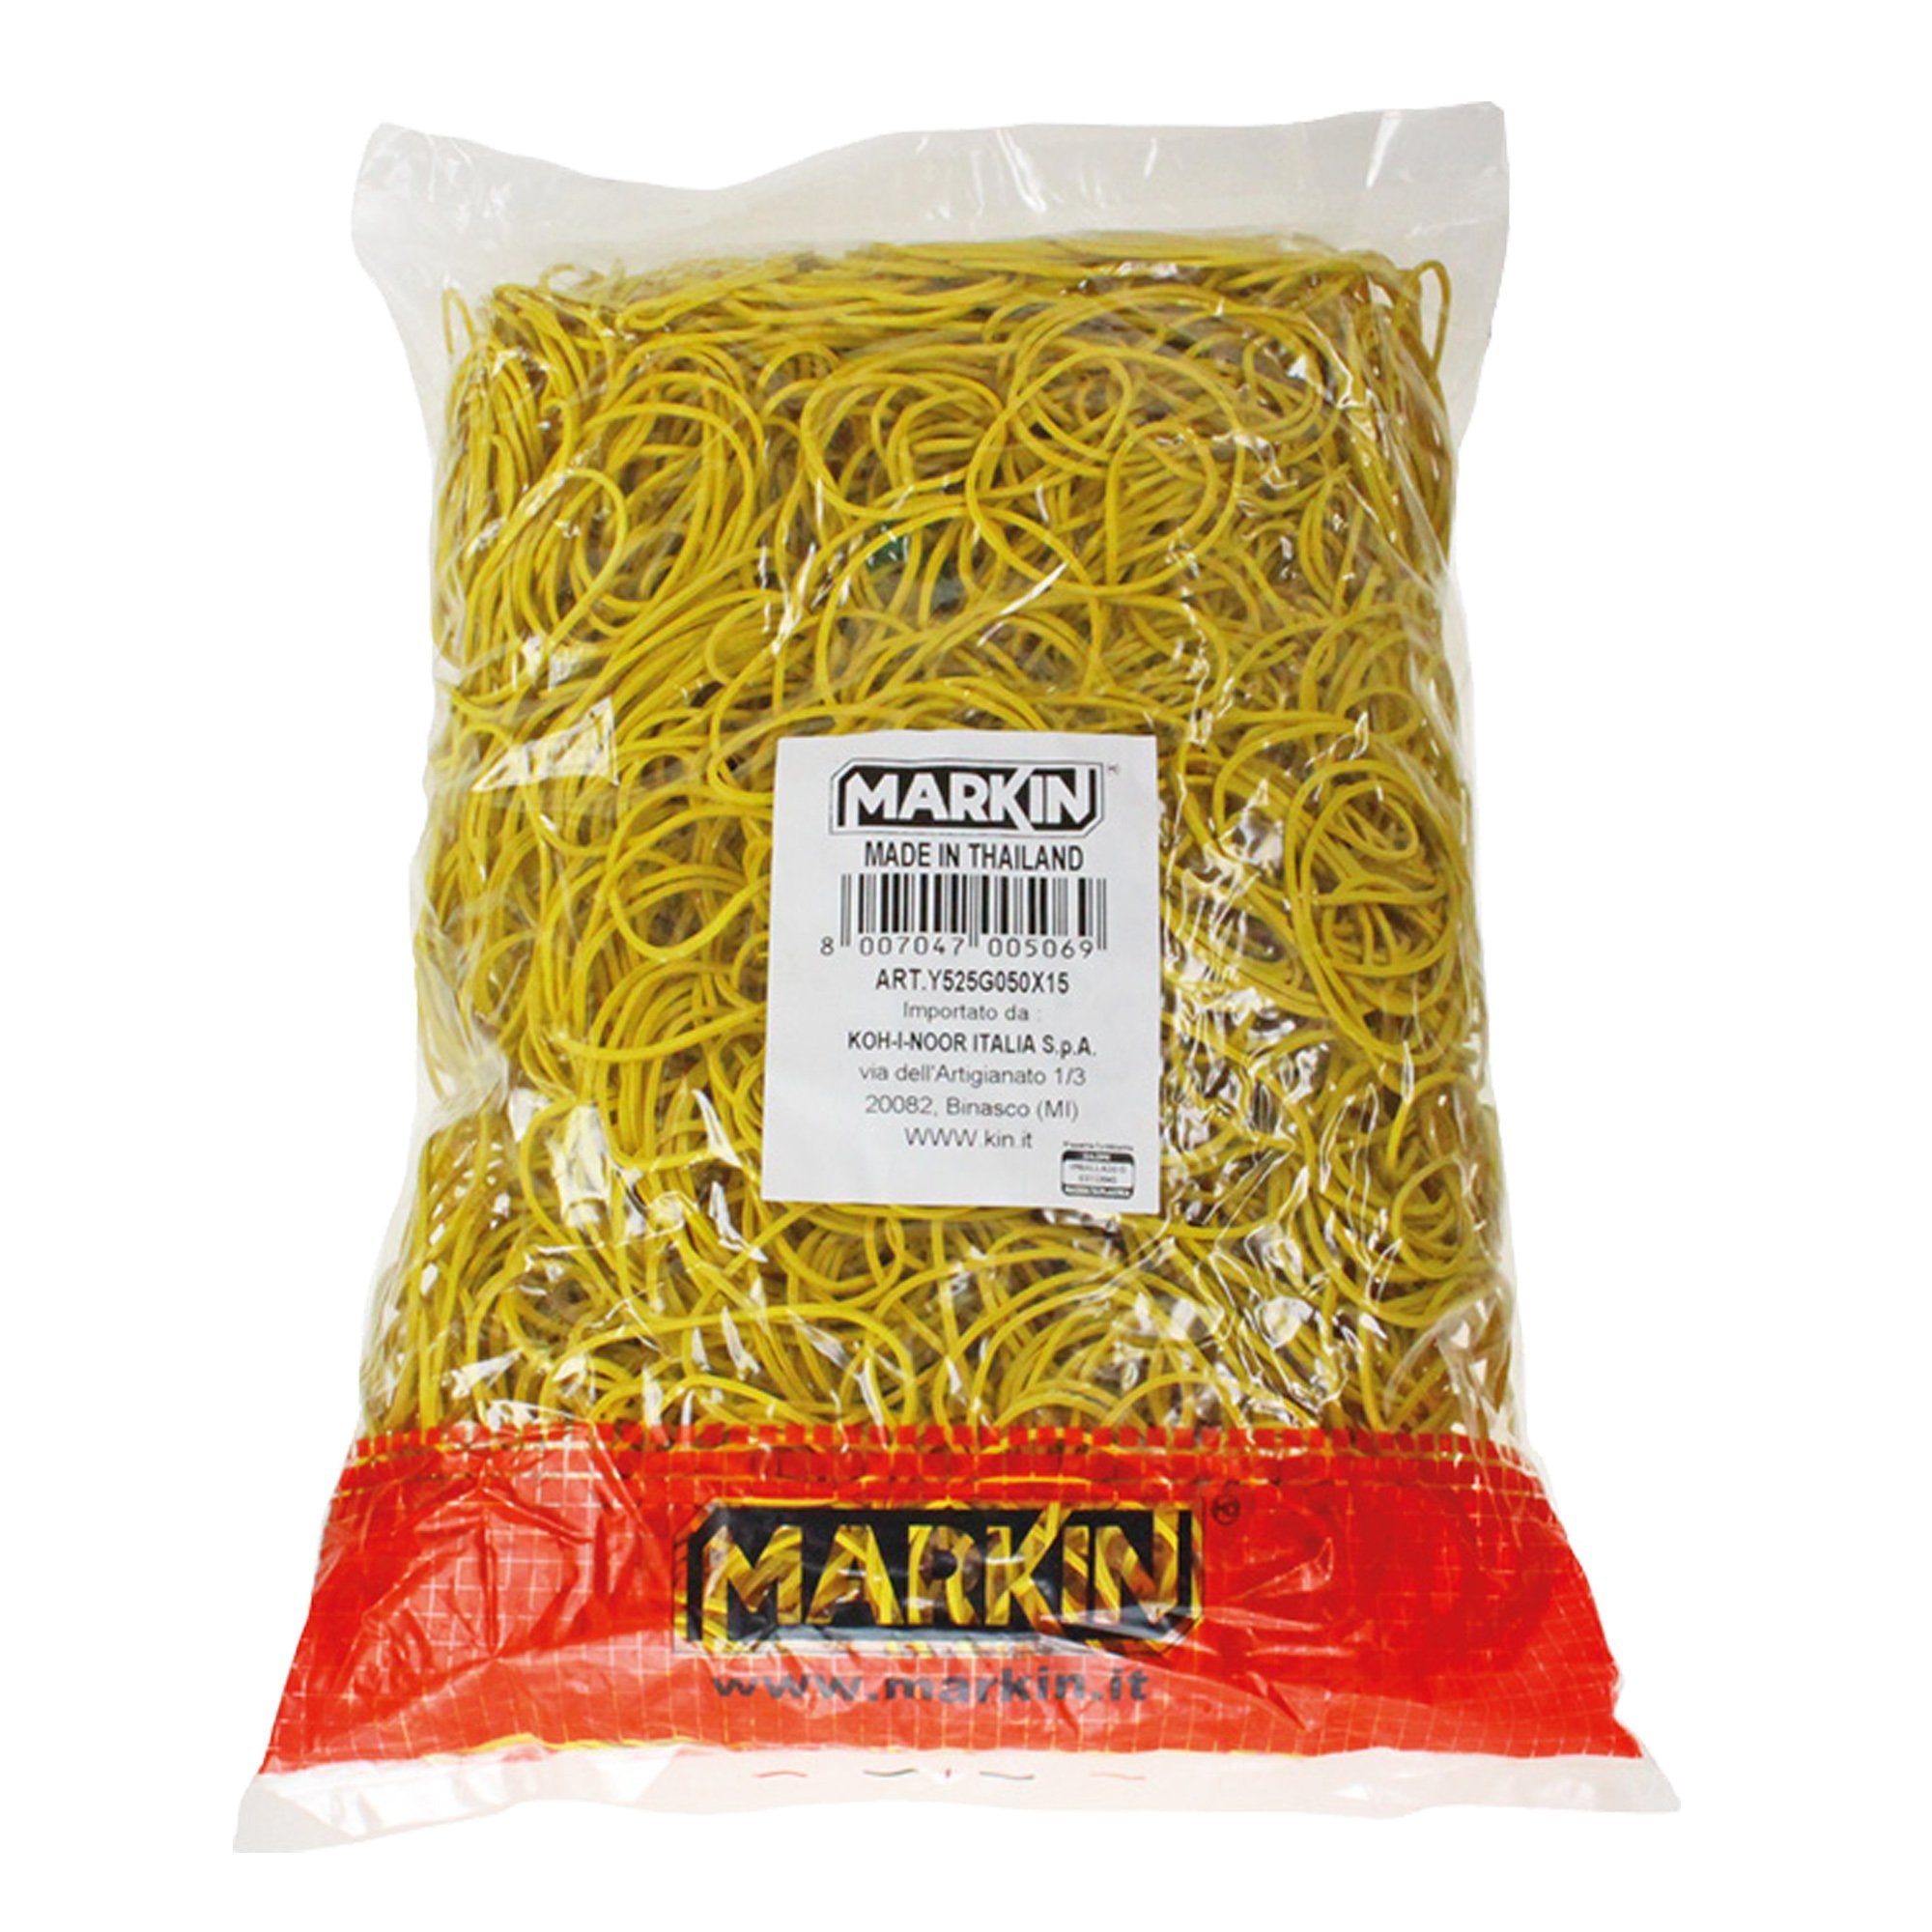 markin-elastico-gomma-giallo-d40-sacco-1kg